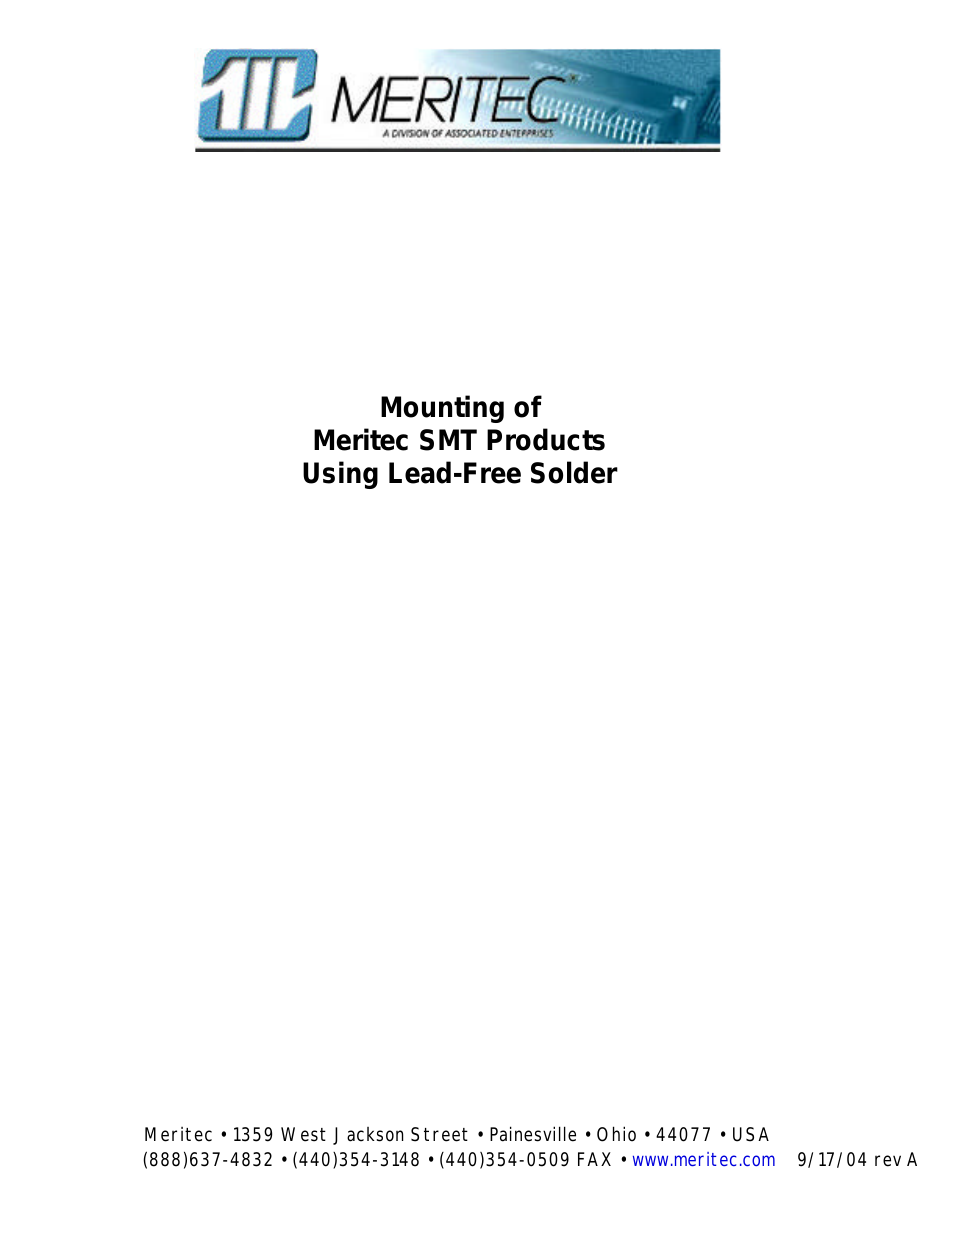 Meritec SMT Products Using Lead-Free Solder